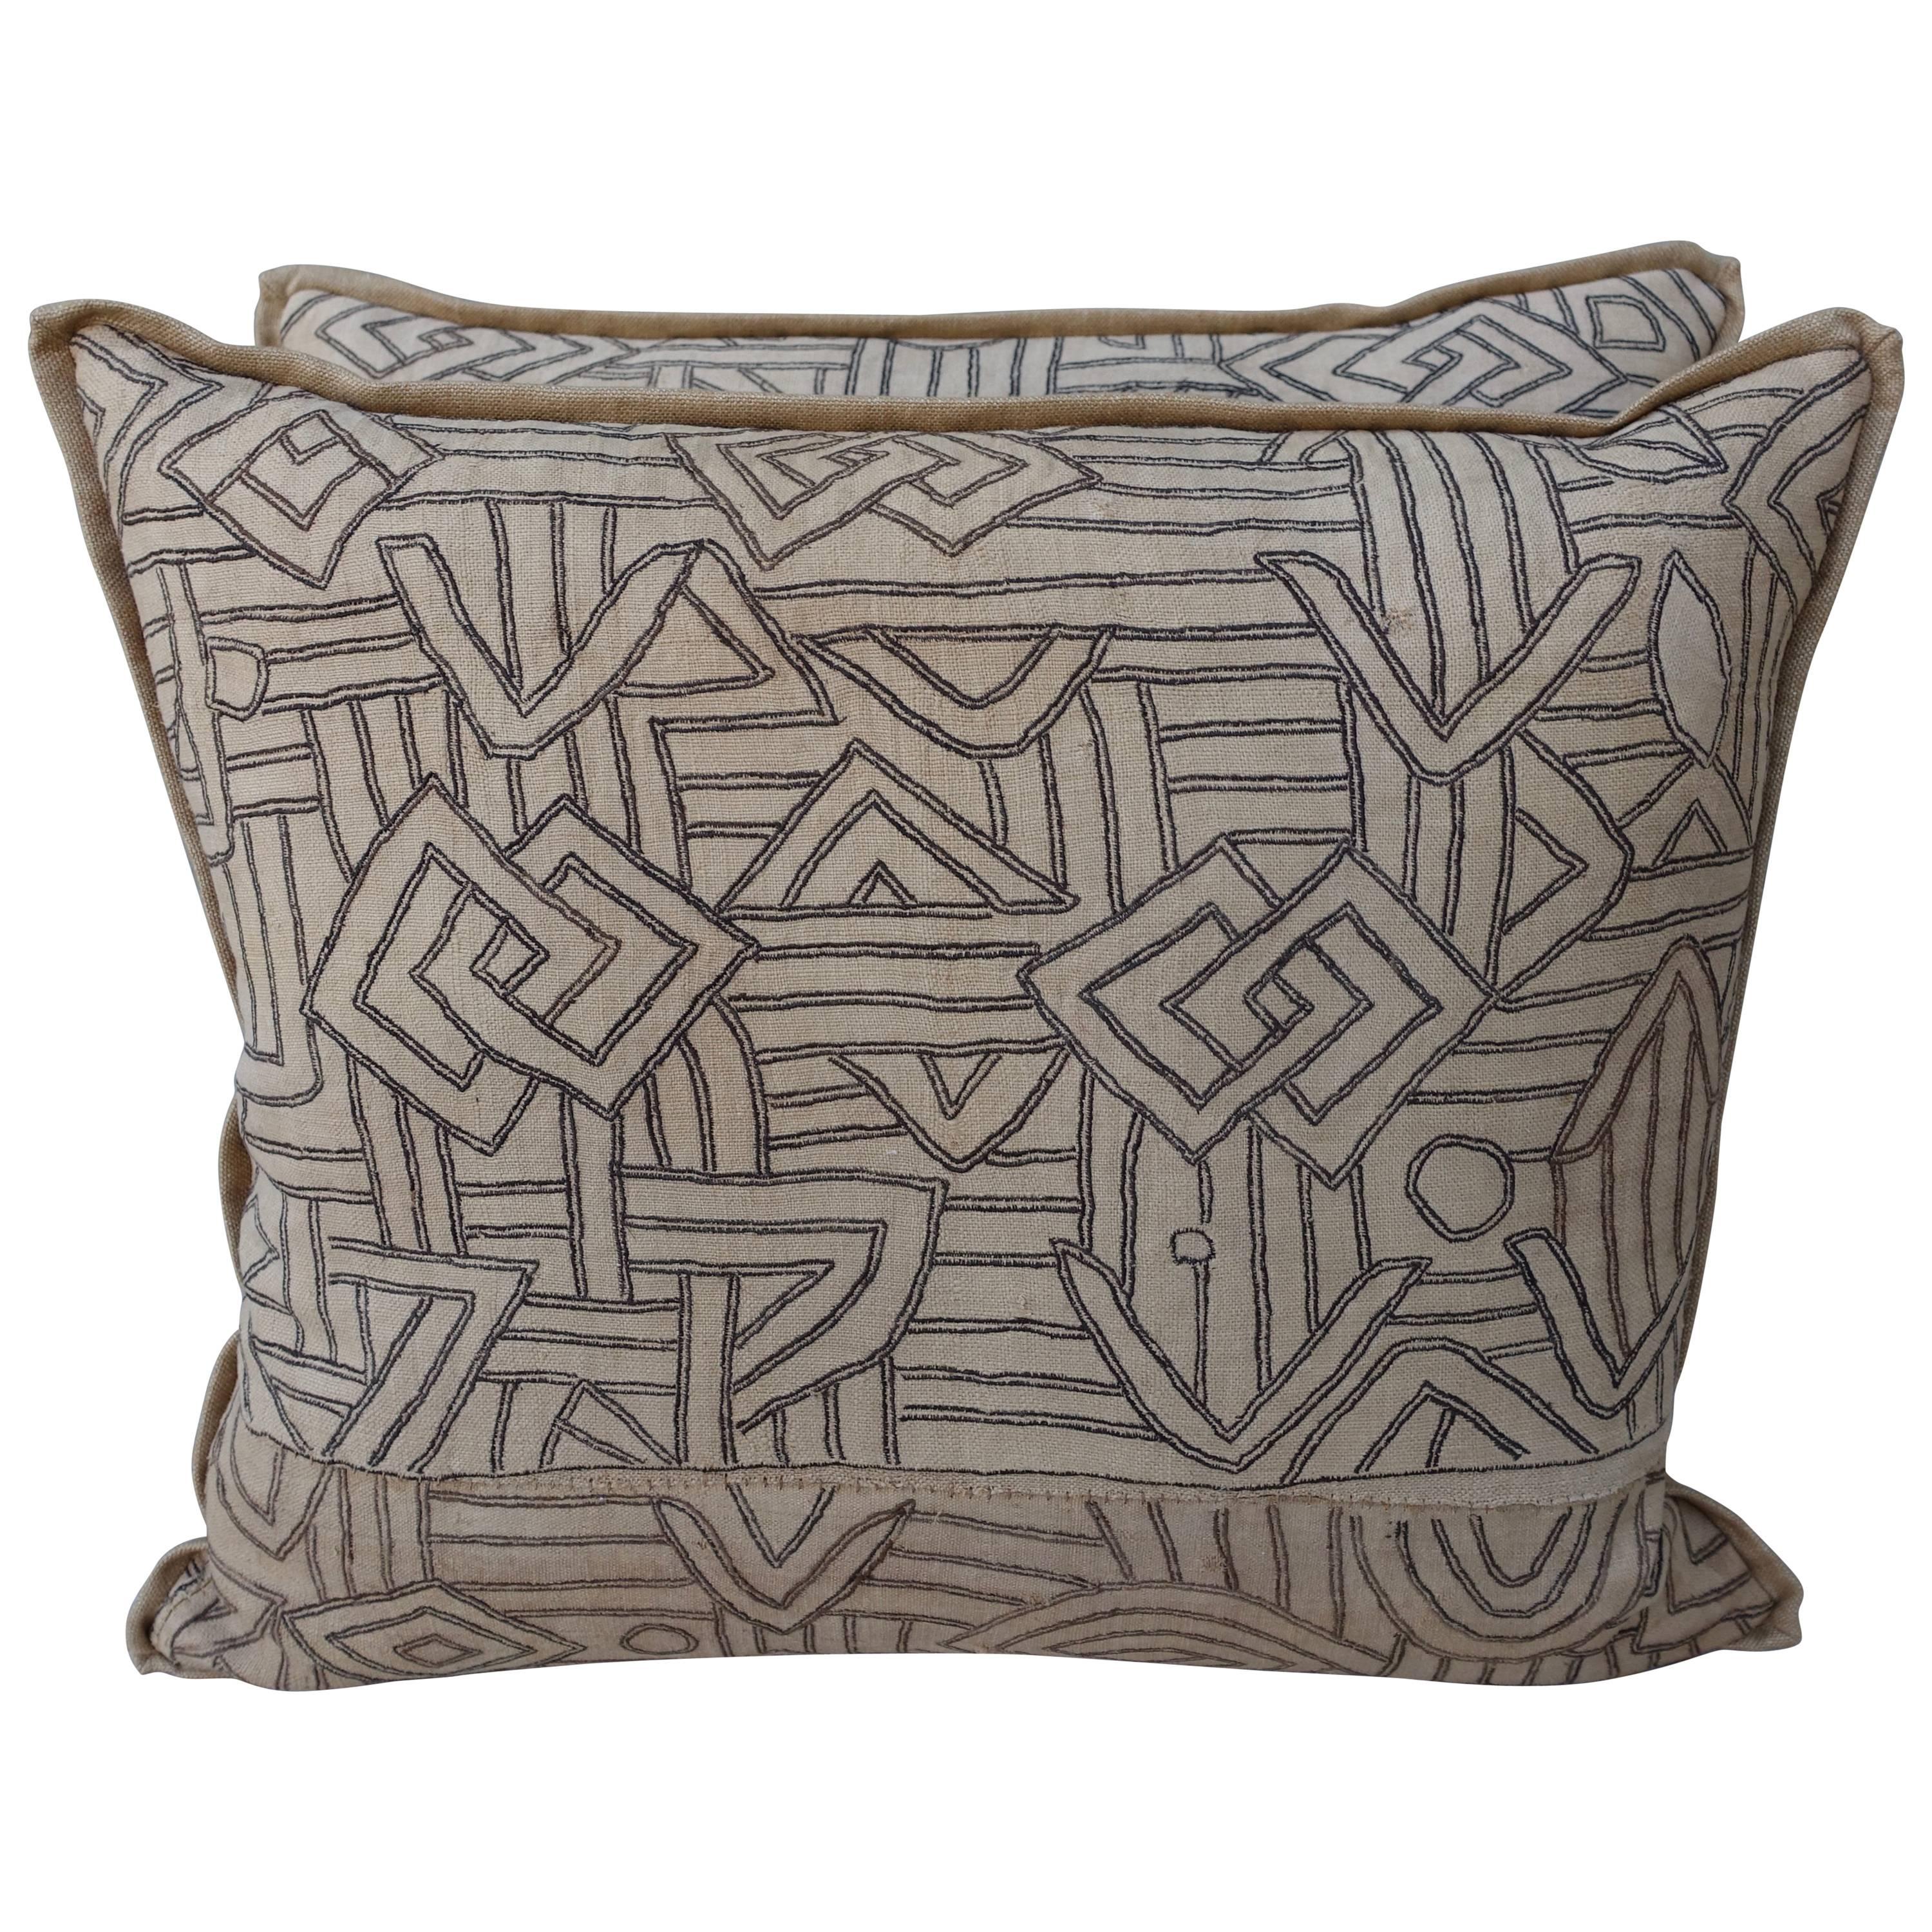 Pair of Geometric Kuba Cloth Pillows